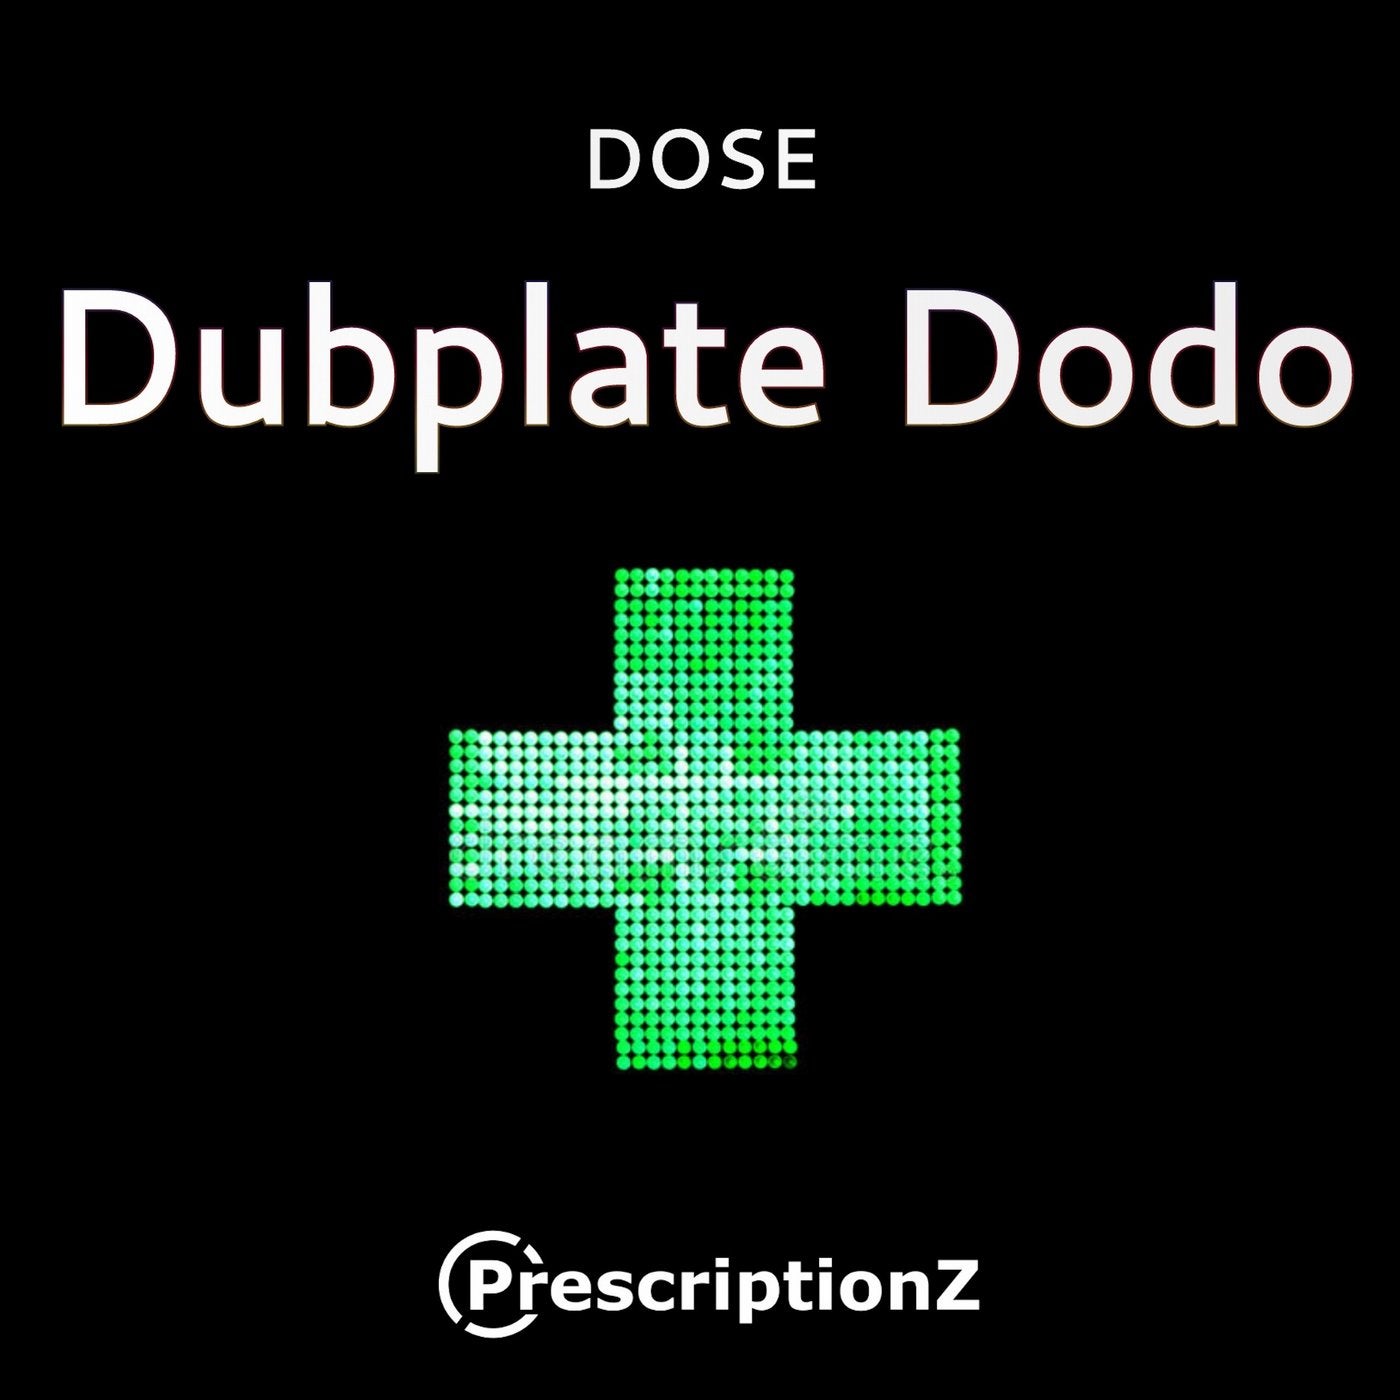 Dubplate Dodo